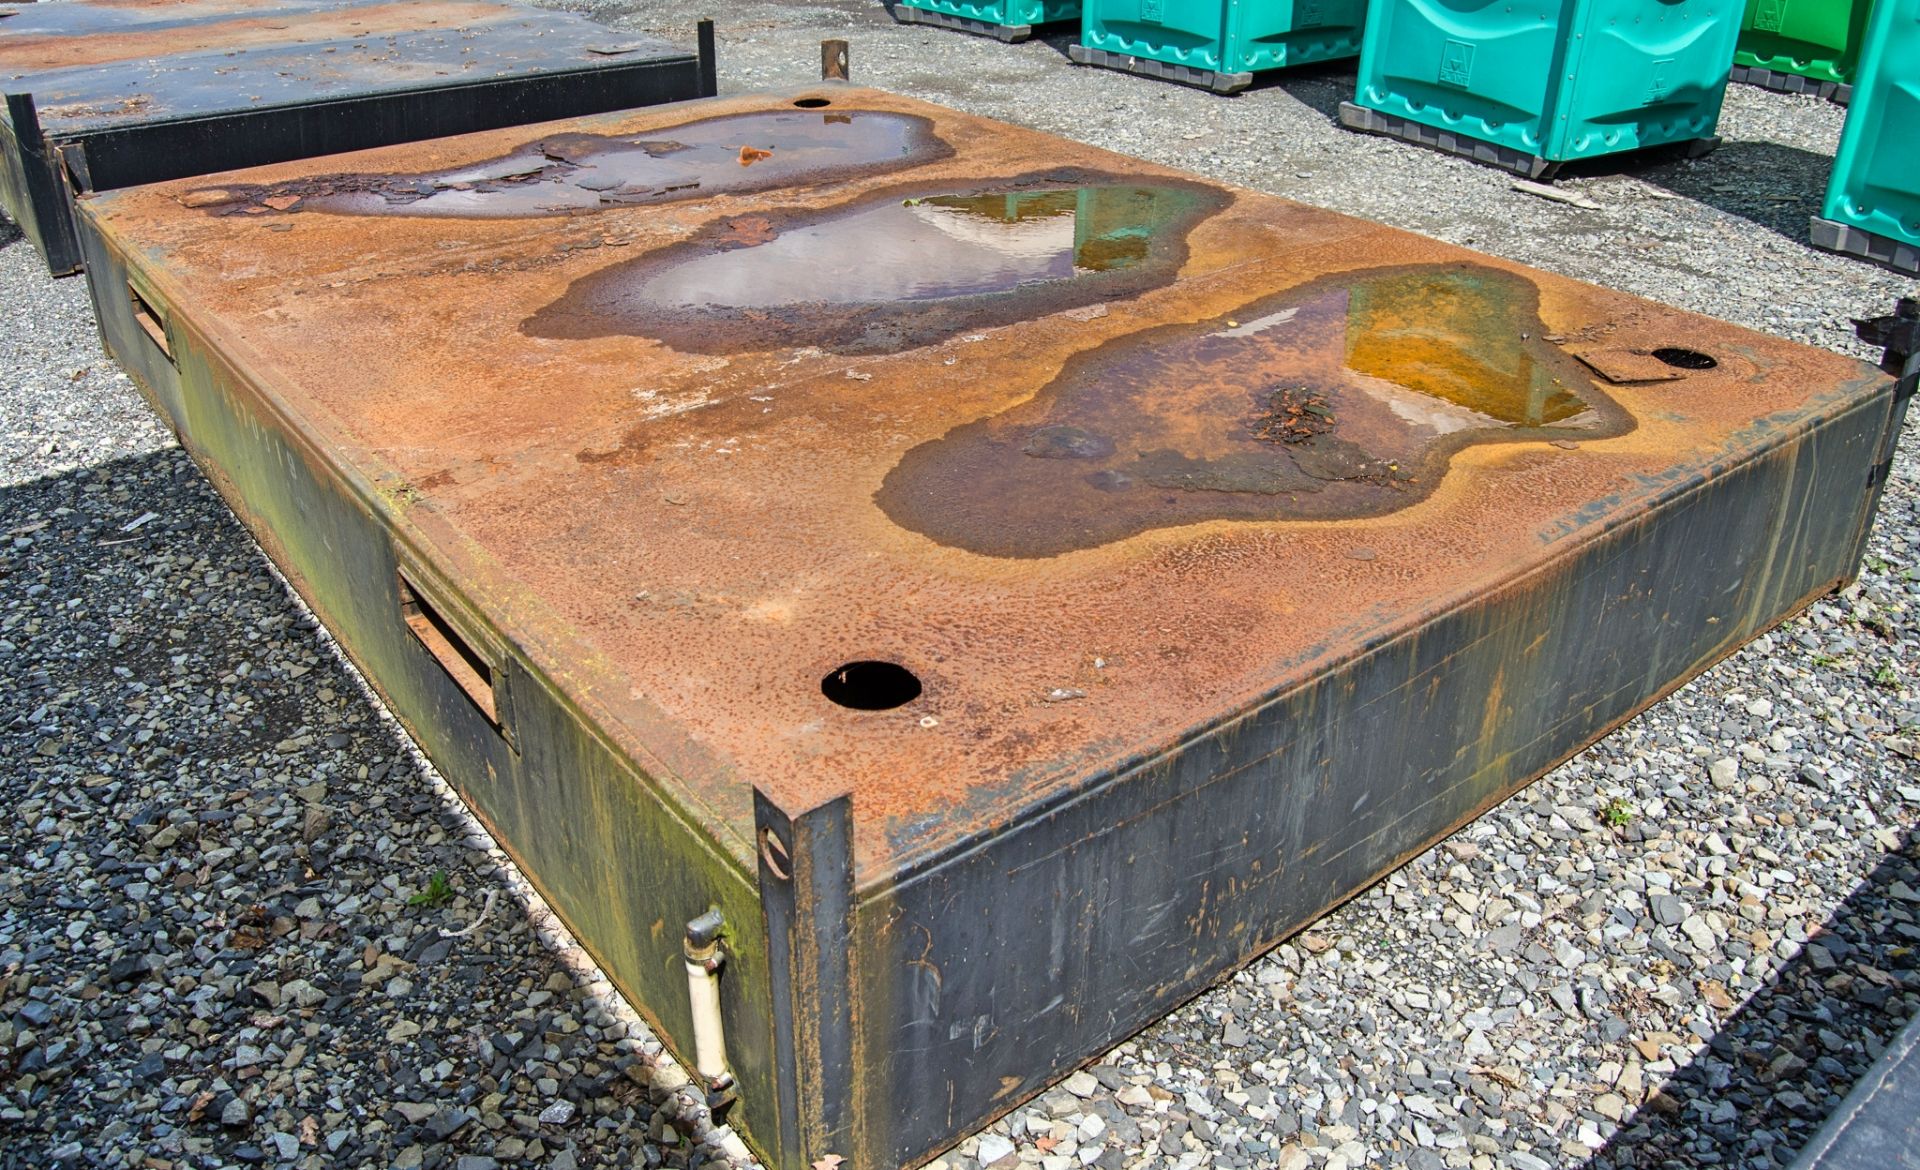 12ft x 8ft steel effluent tank A670319 - Image 2 of 2